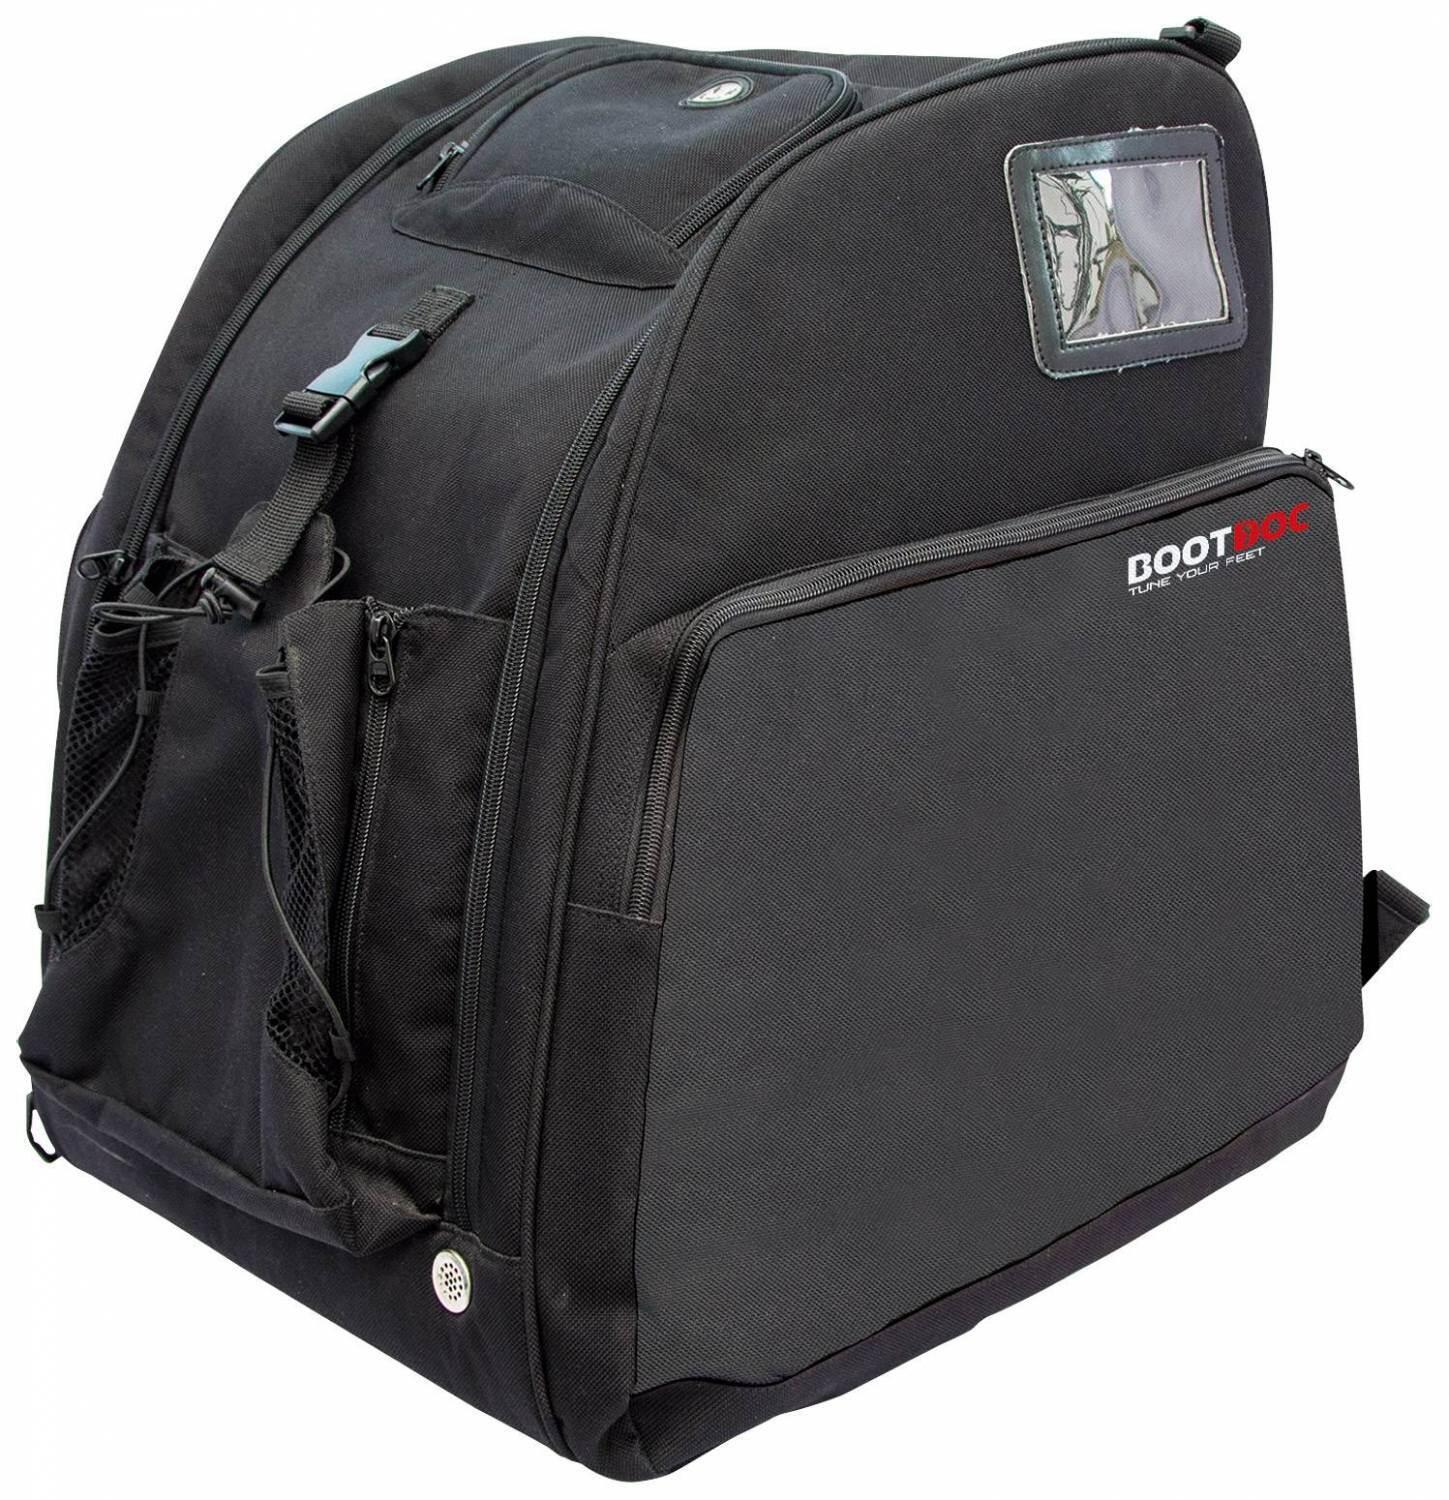 BootDoc Heated Ski Boot Bag Racing beheizbare Tasche (Farbe: schwarz)